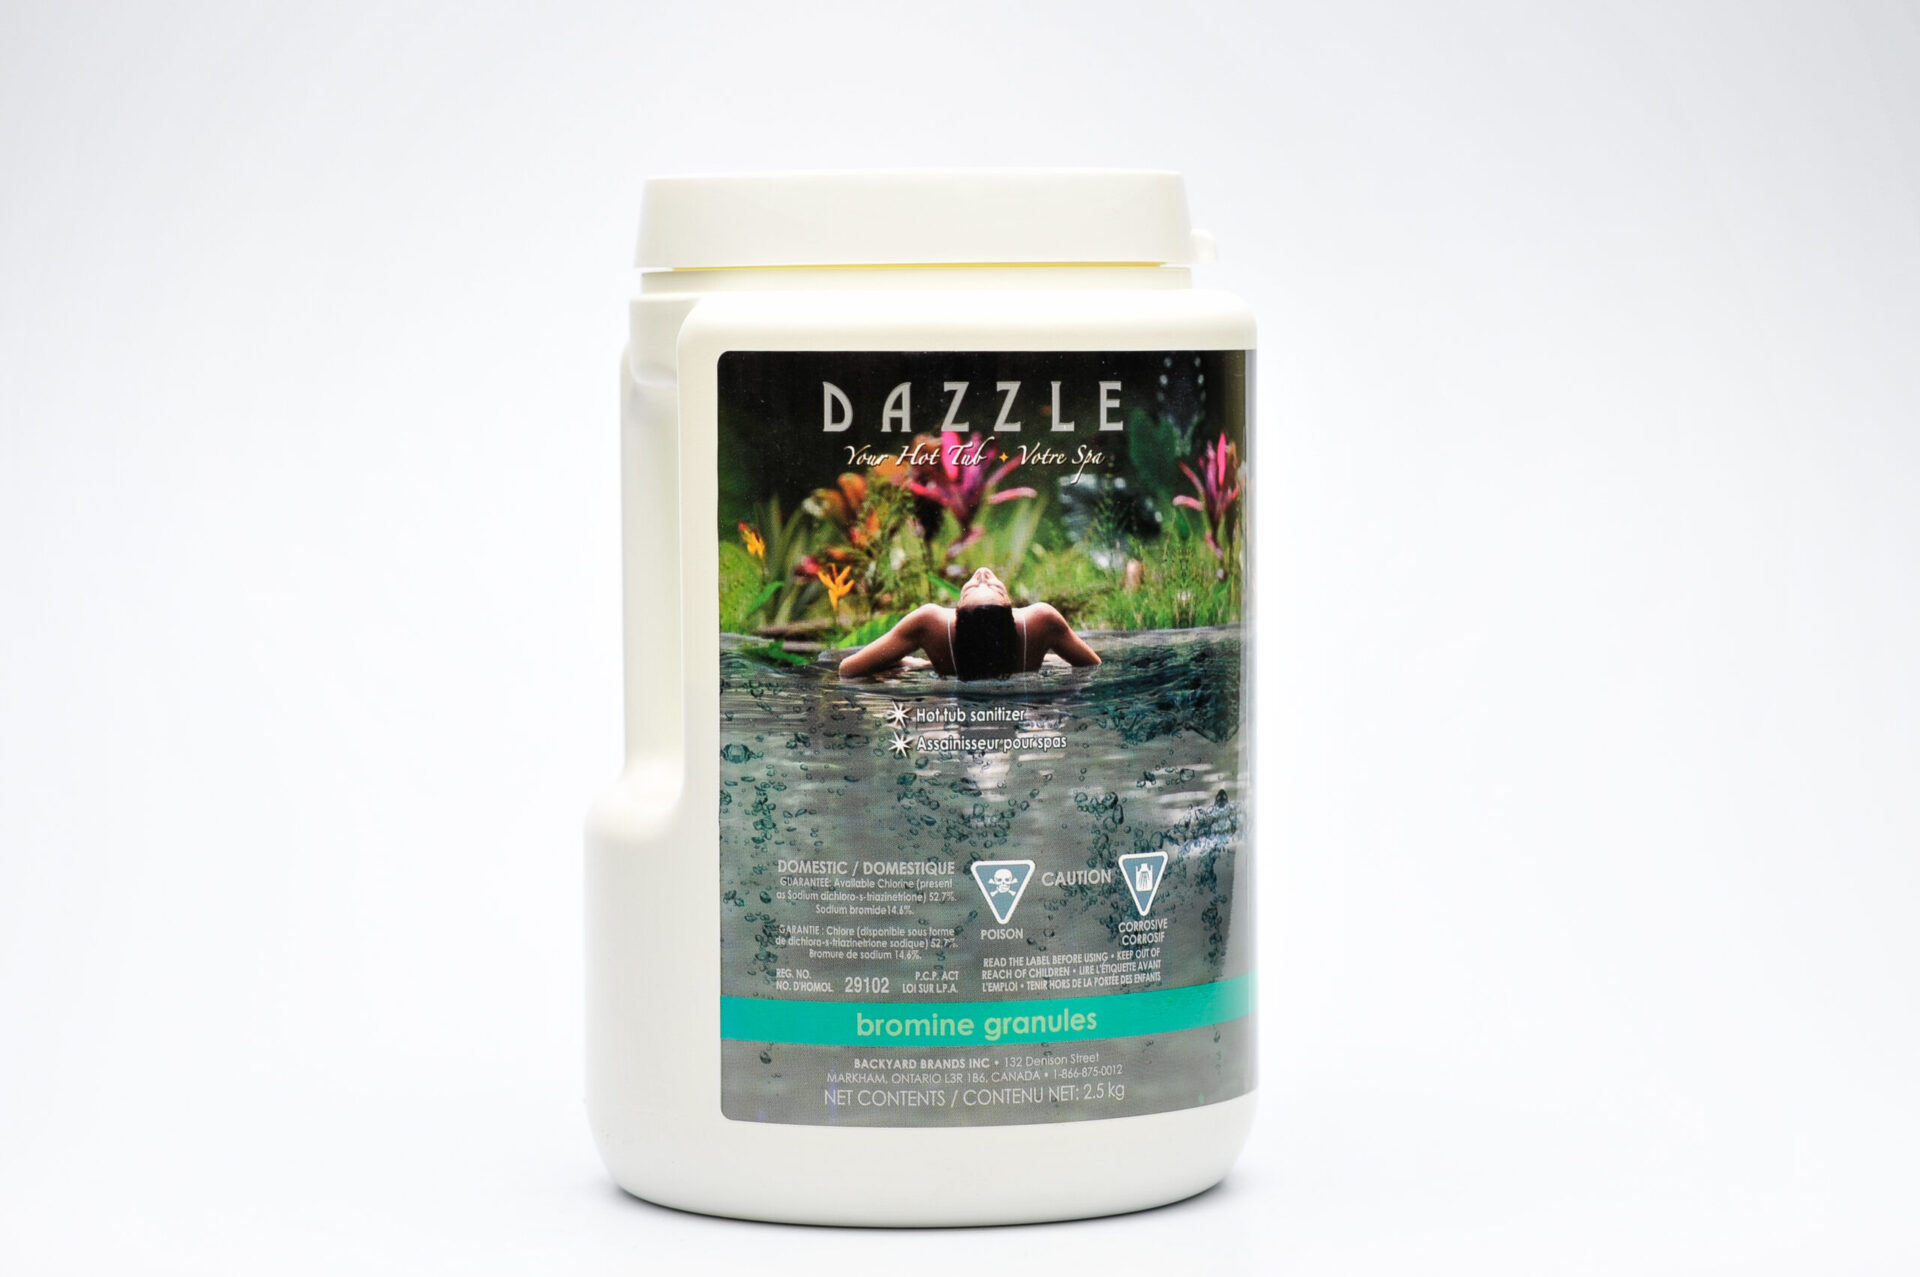 Dazzle Bromine Granules 2.5kg scaled - BROMINE GRANULES - 2.5kg